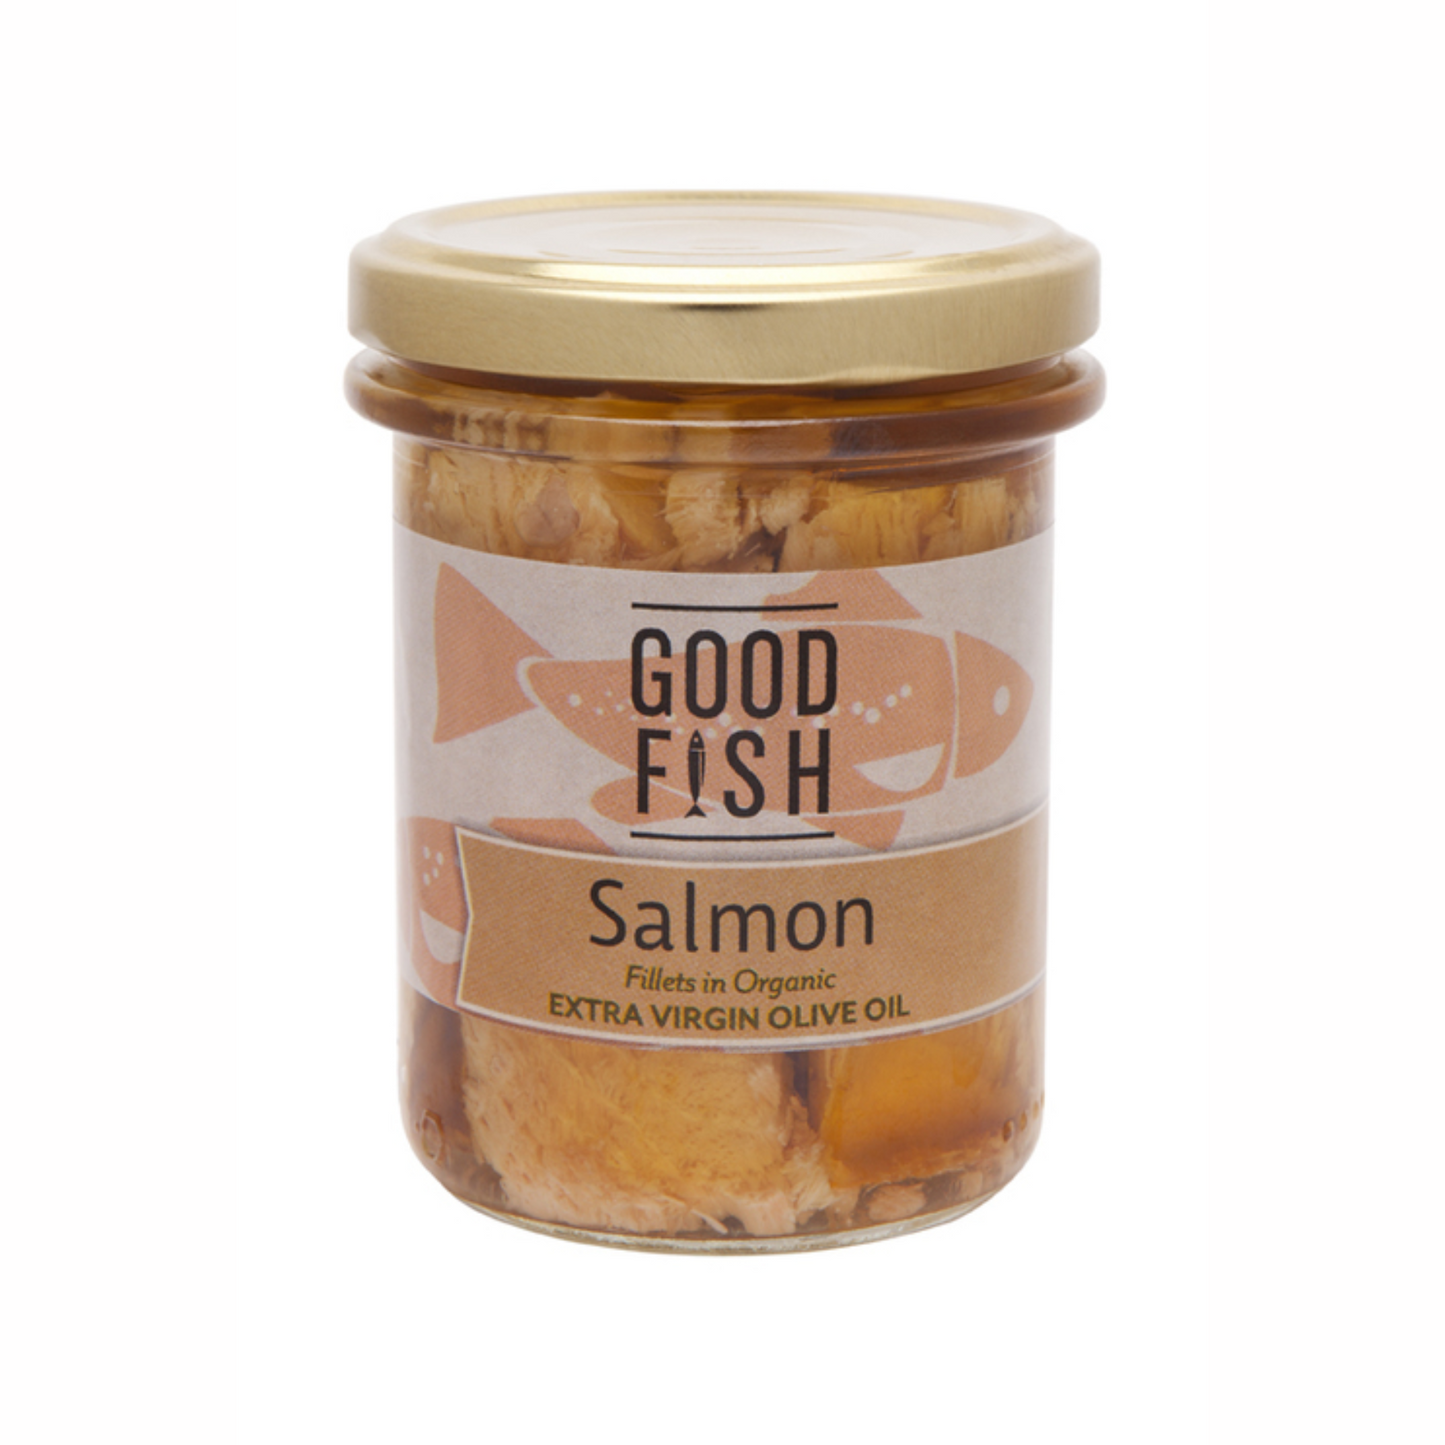 Good Fish Salmon Fillets 190g, In Organic Extra Virgin Olive Oil (Glass Jar)